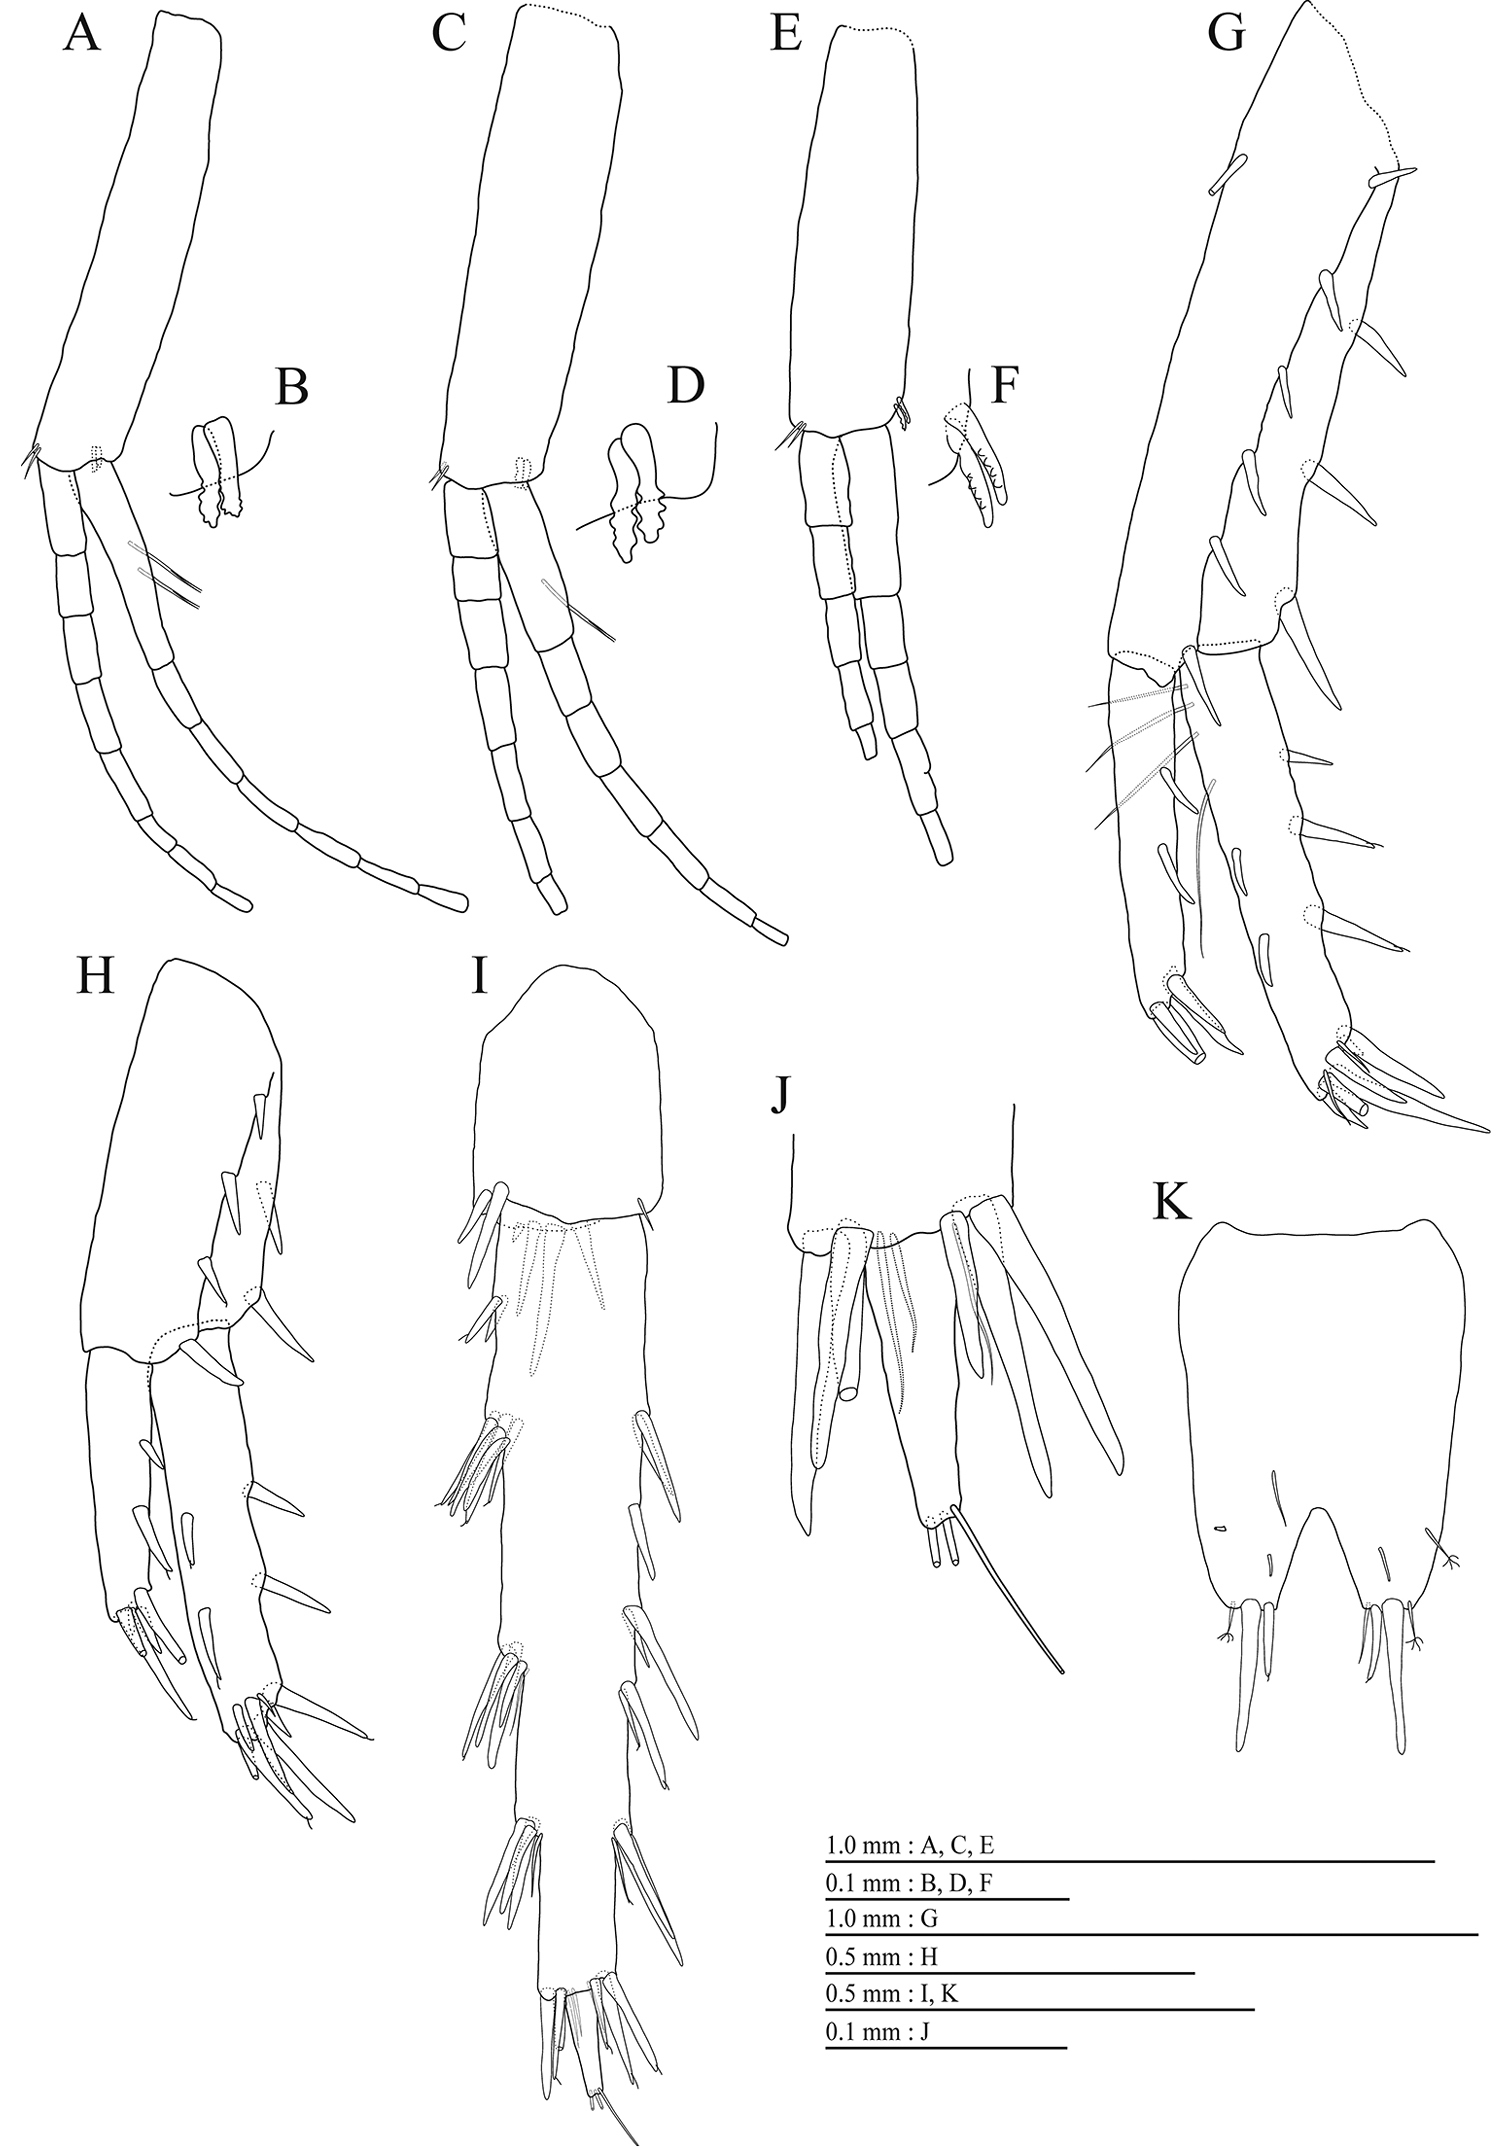 A New Cave Amphipod Pseudocrangonyx Wonkimi Sp Nov Crustacea Amphipoda Pseudocrangonyctidae From The Korean Peninsula